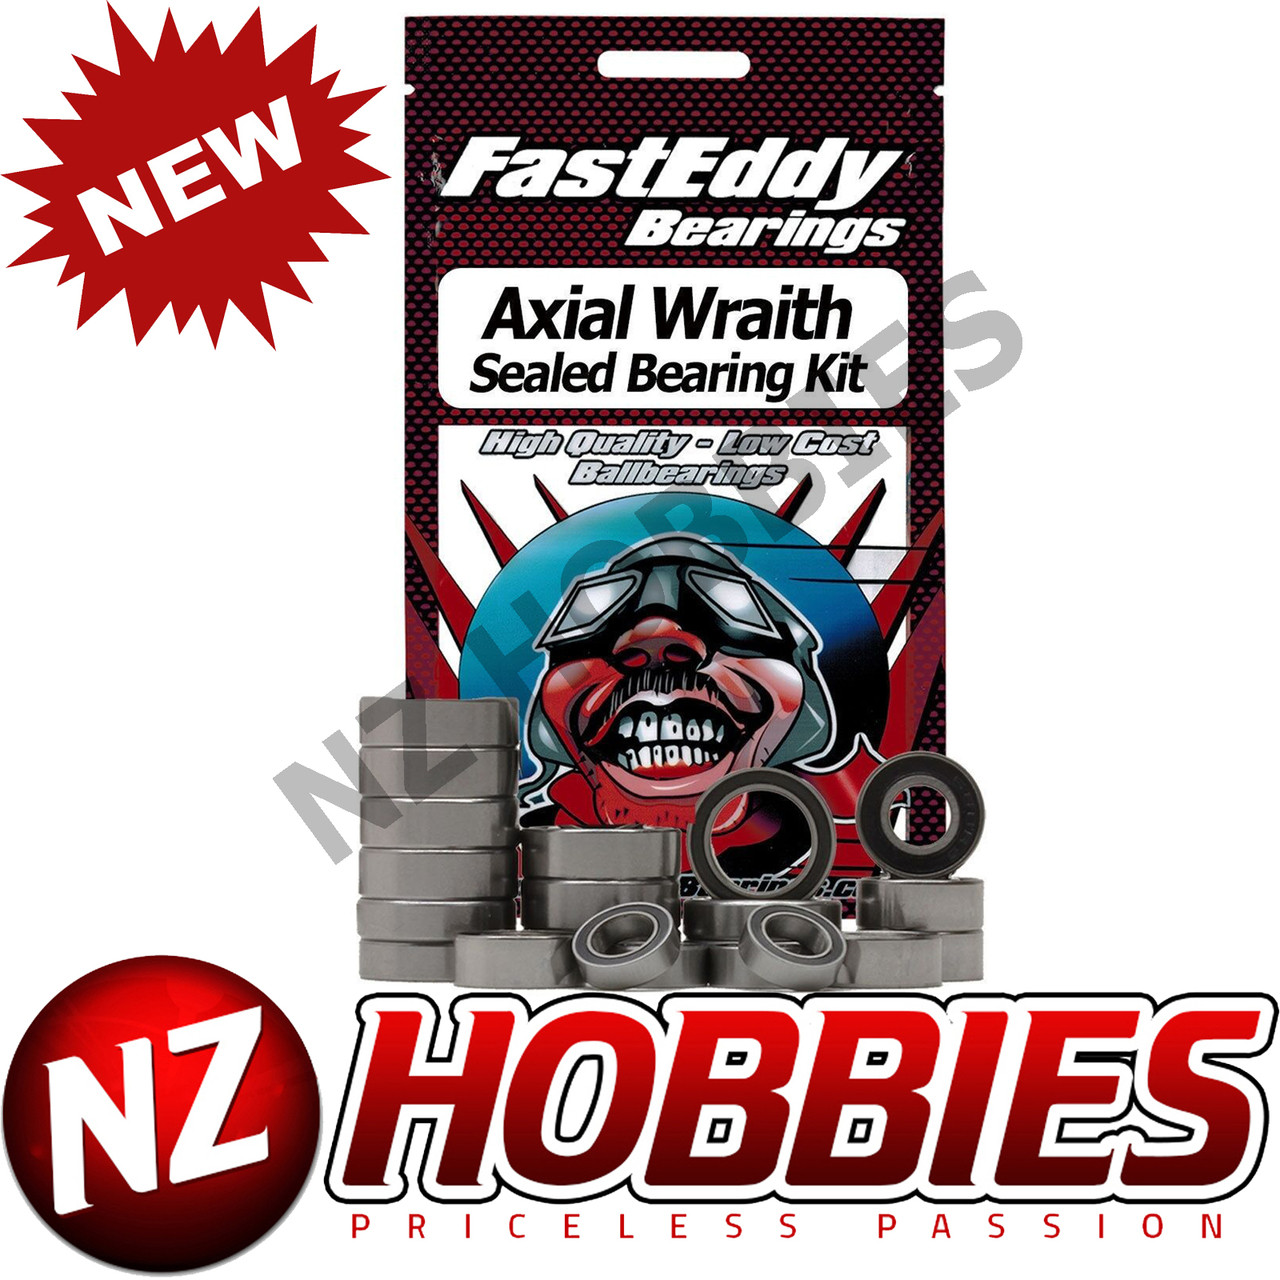 Fast Eddy Bearings Axial Wraith Sealed Bearing Kit TFE101